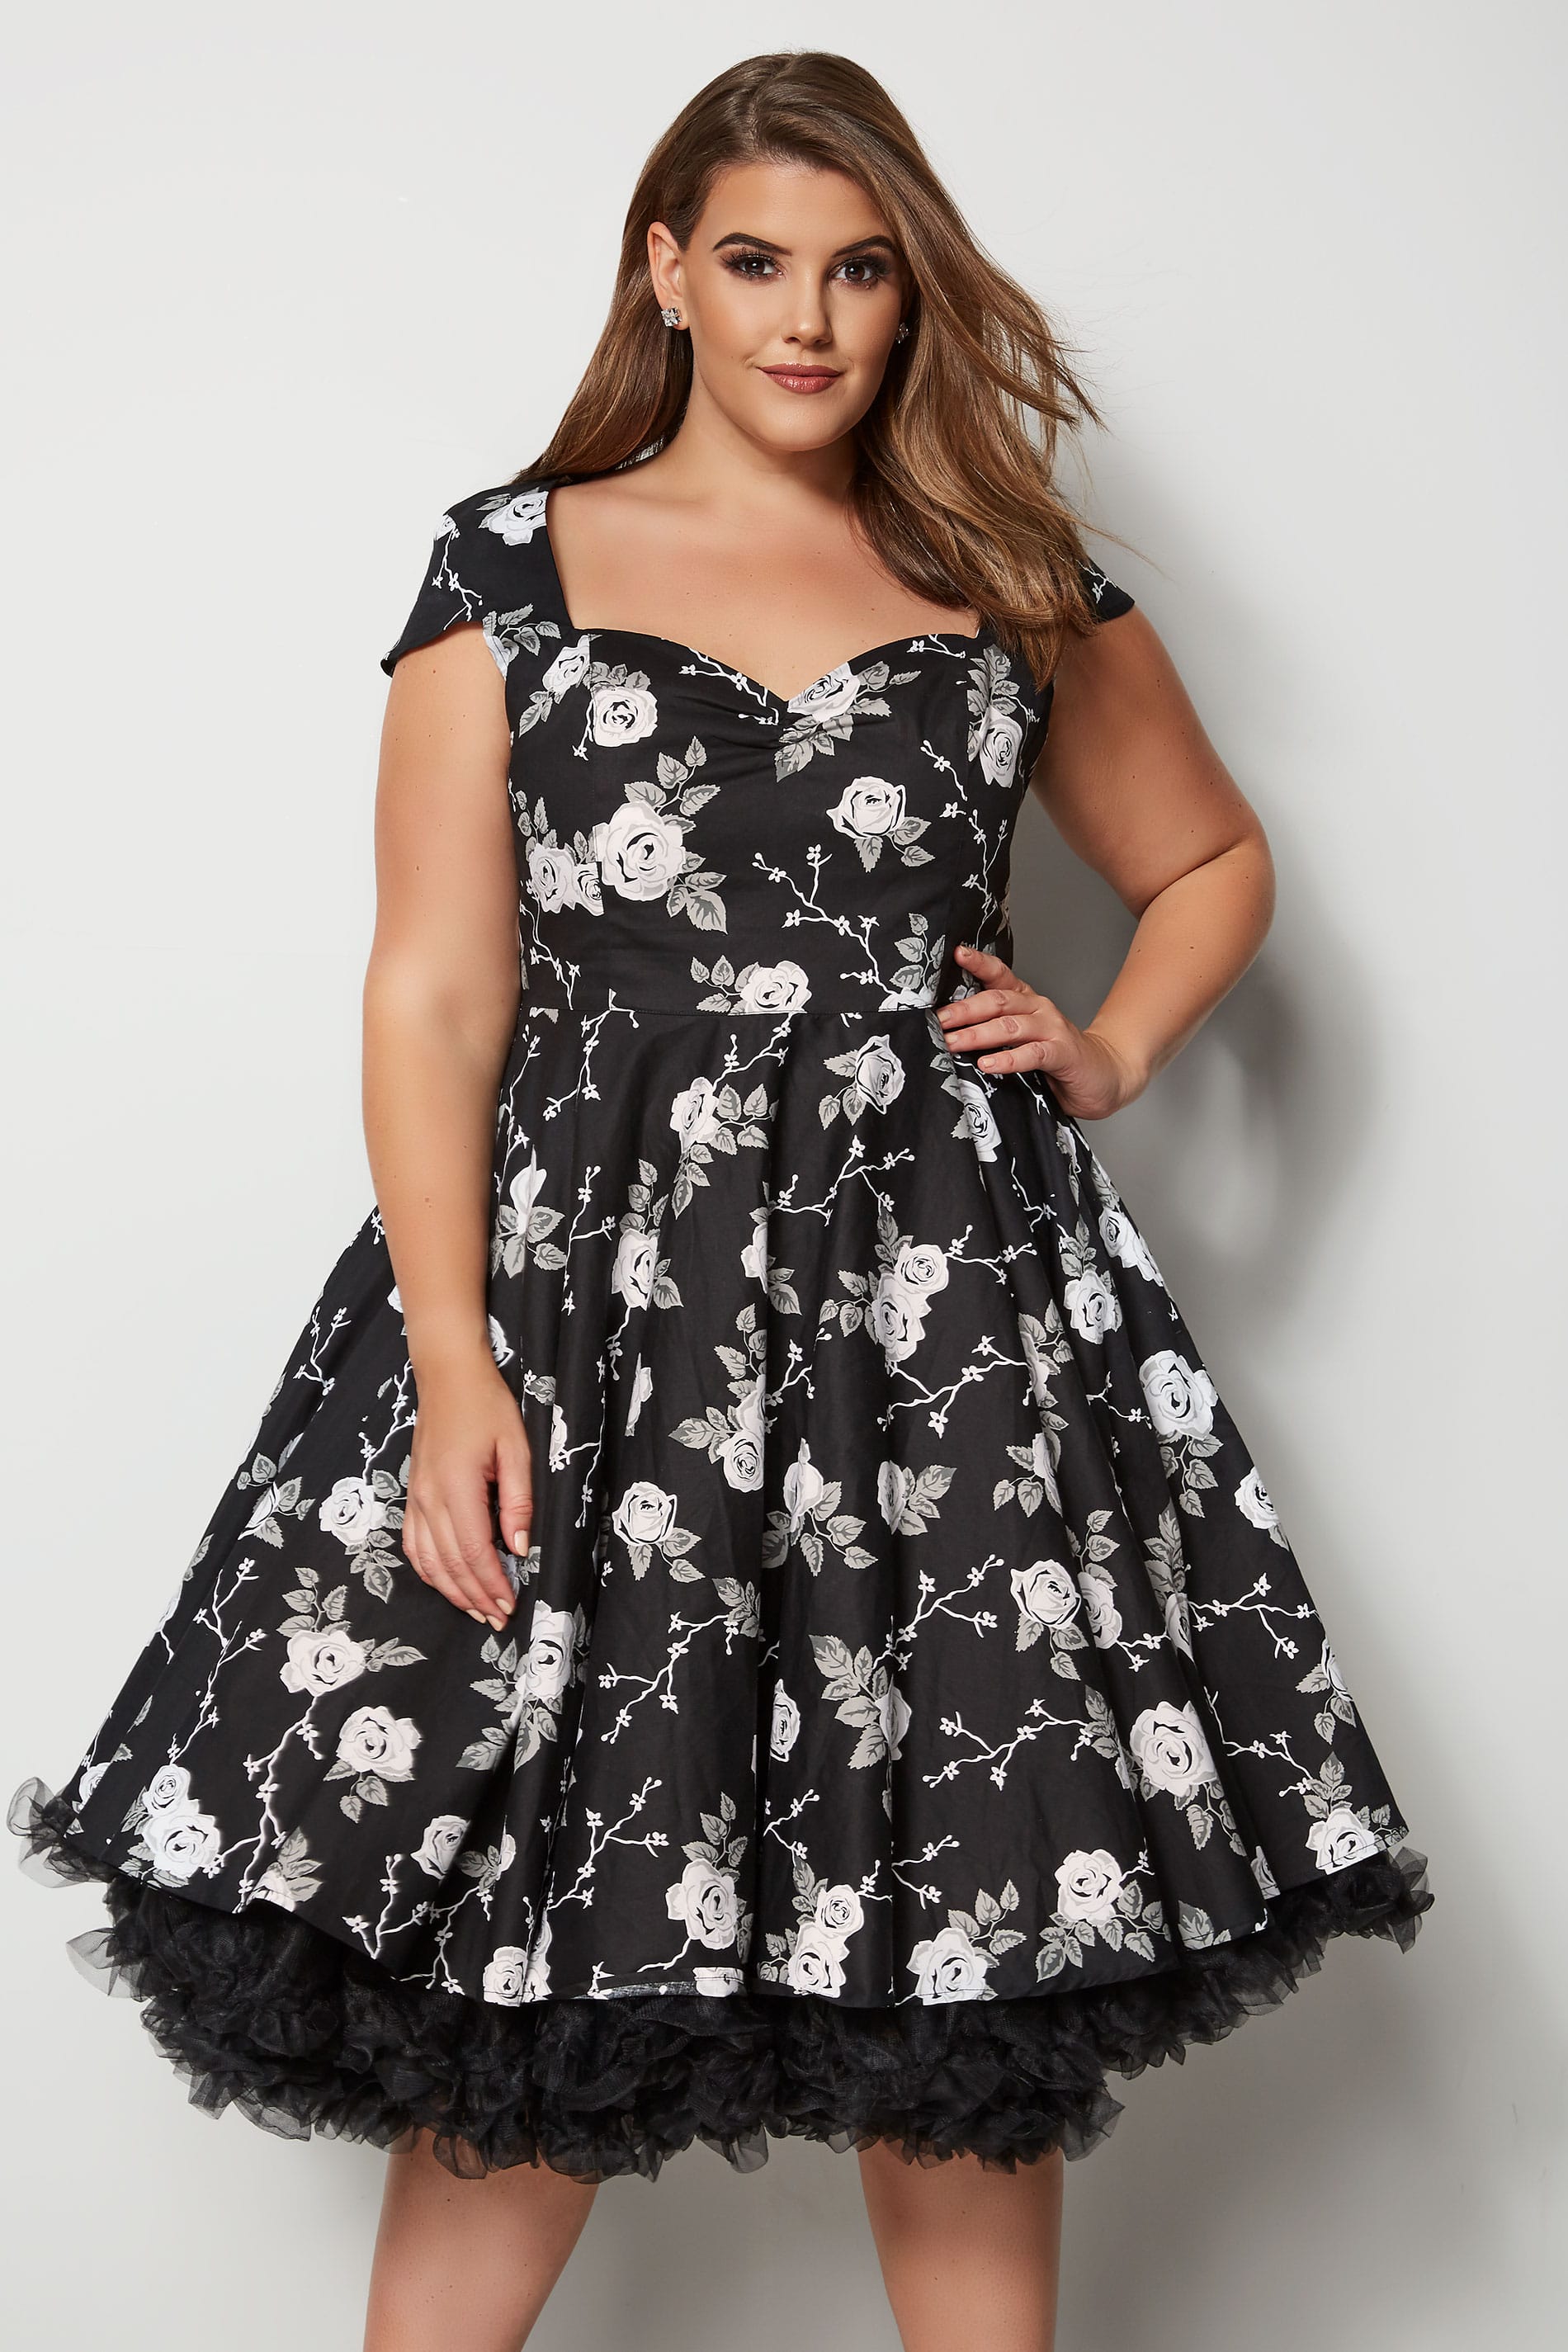 Black and white print dress